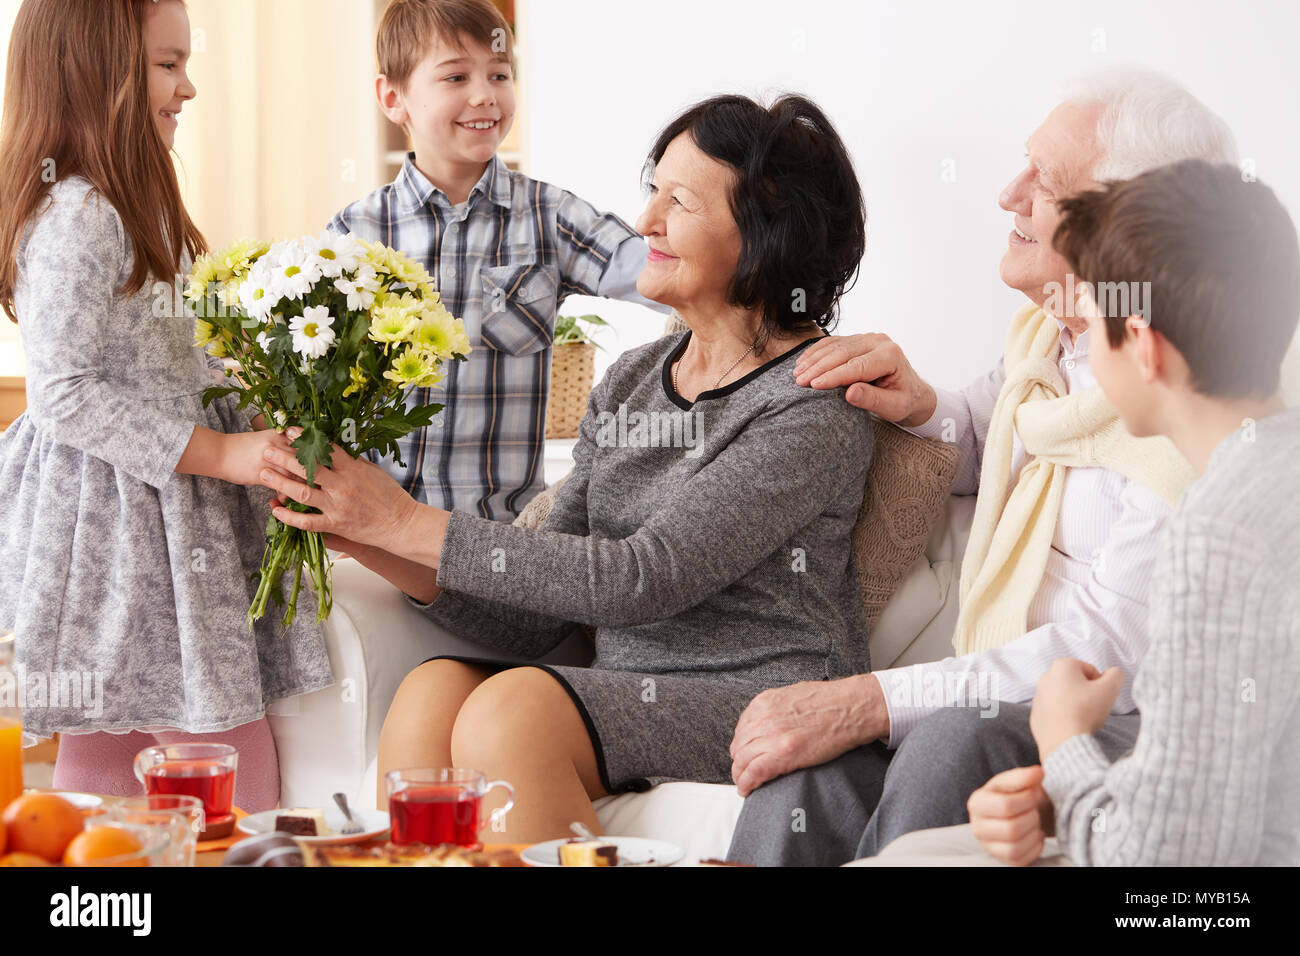 Little girl giving flowers to her happy grandma Stock Photo